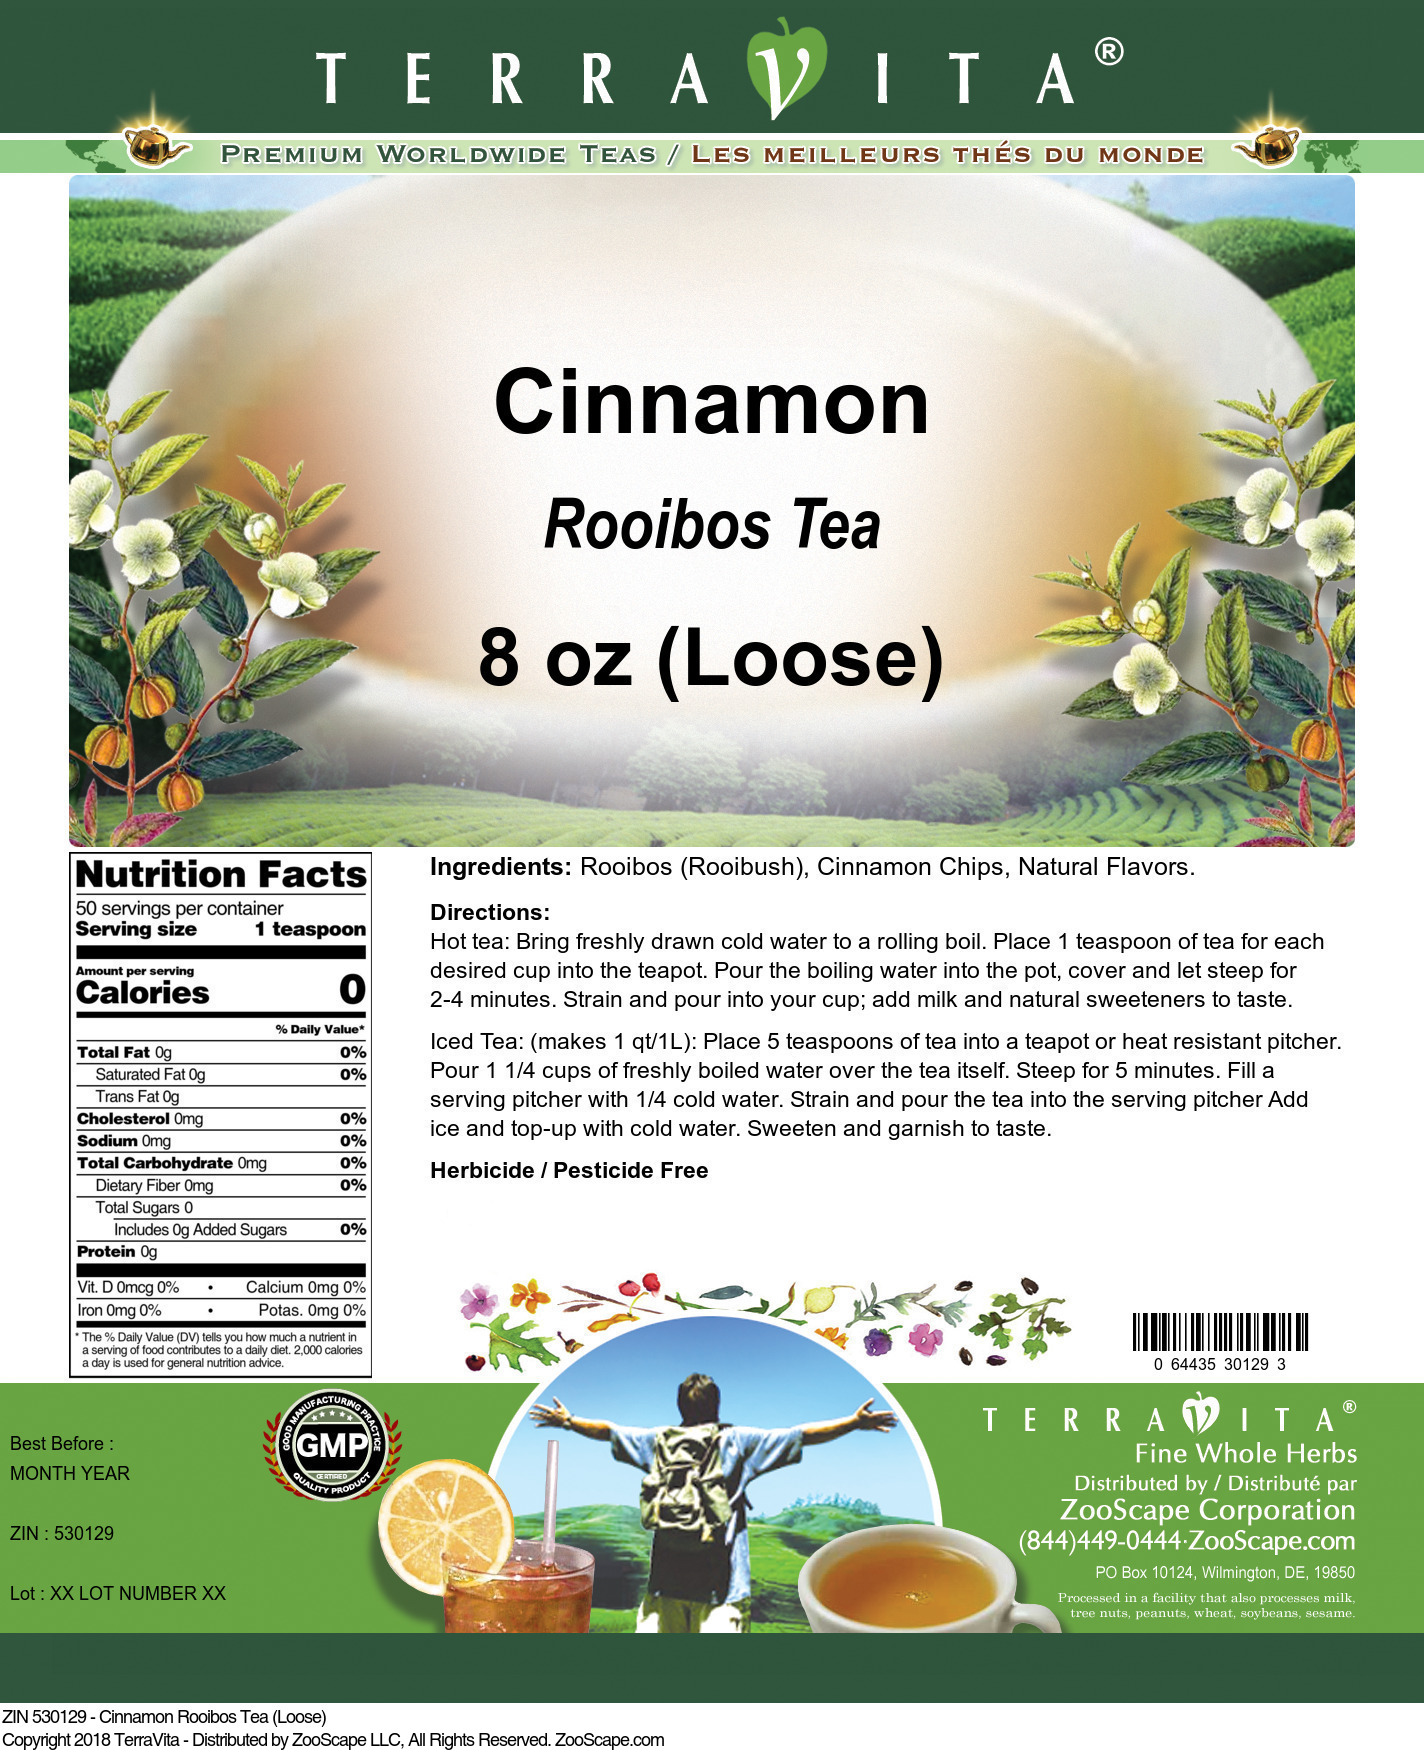 Cinnamon Rooibos Tea (Loose) - Label